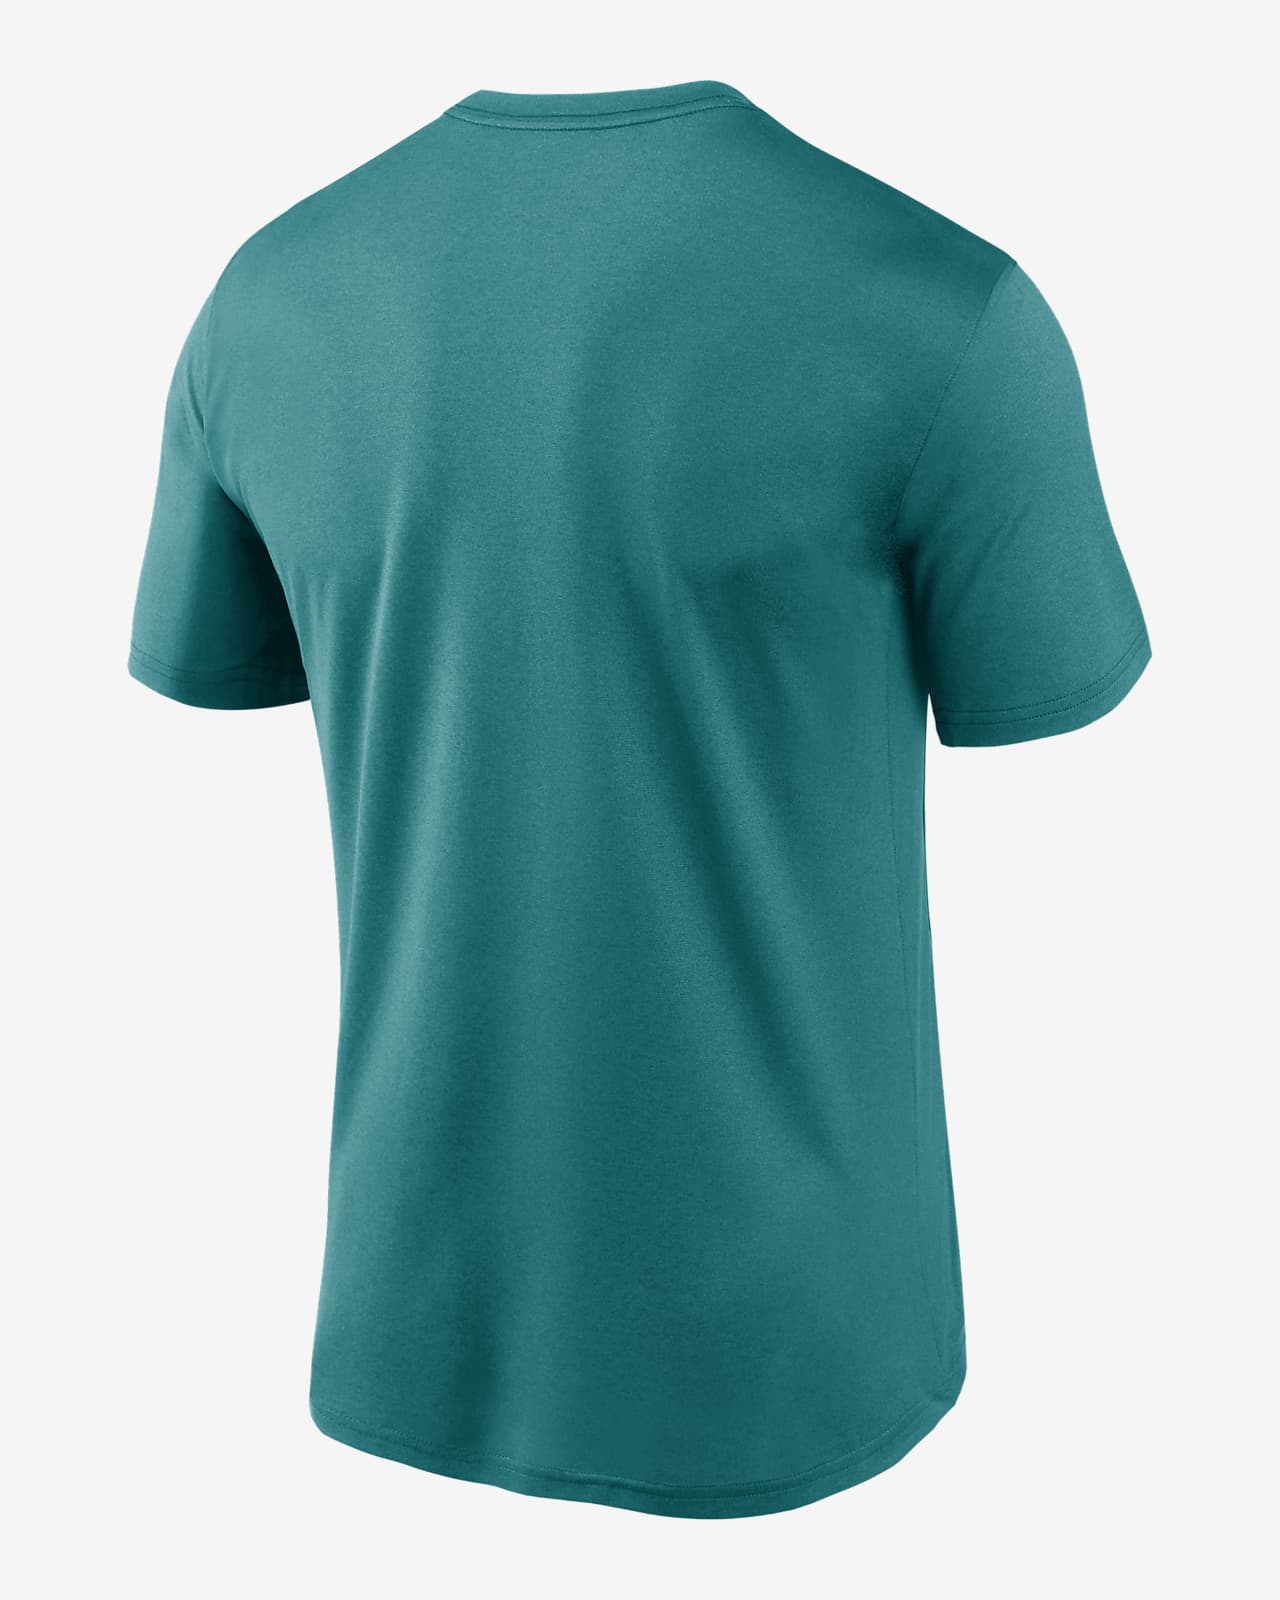 Nike Dri-FIT Logo Legend (MLB Seattle Mariners) Men's T-Shirt.